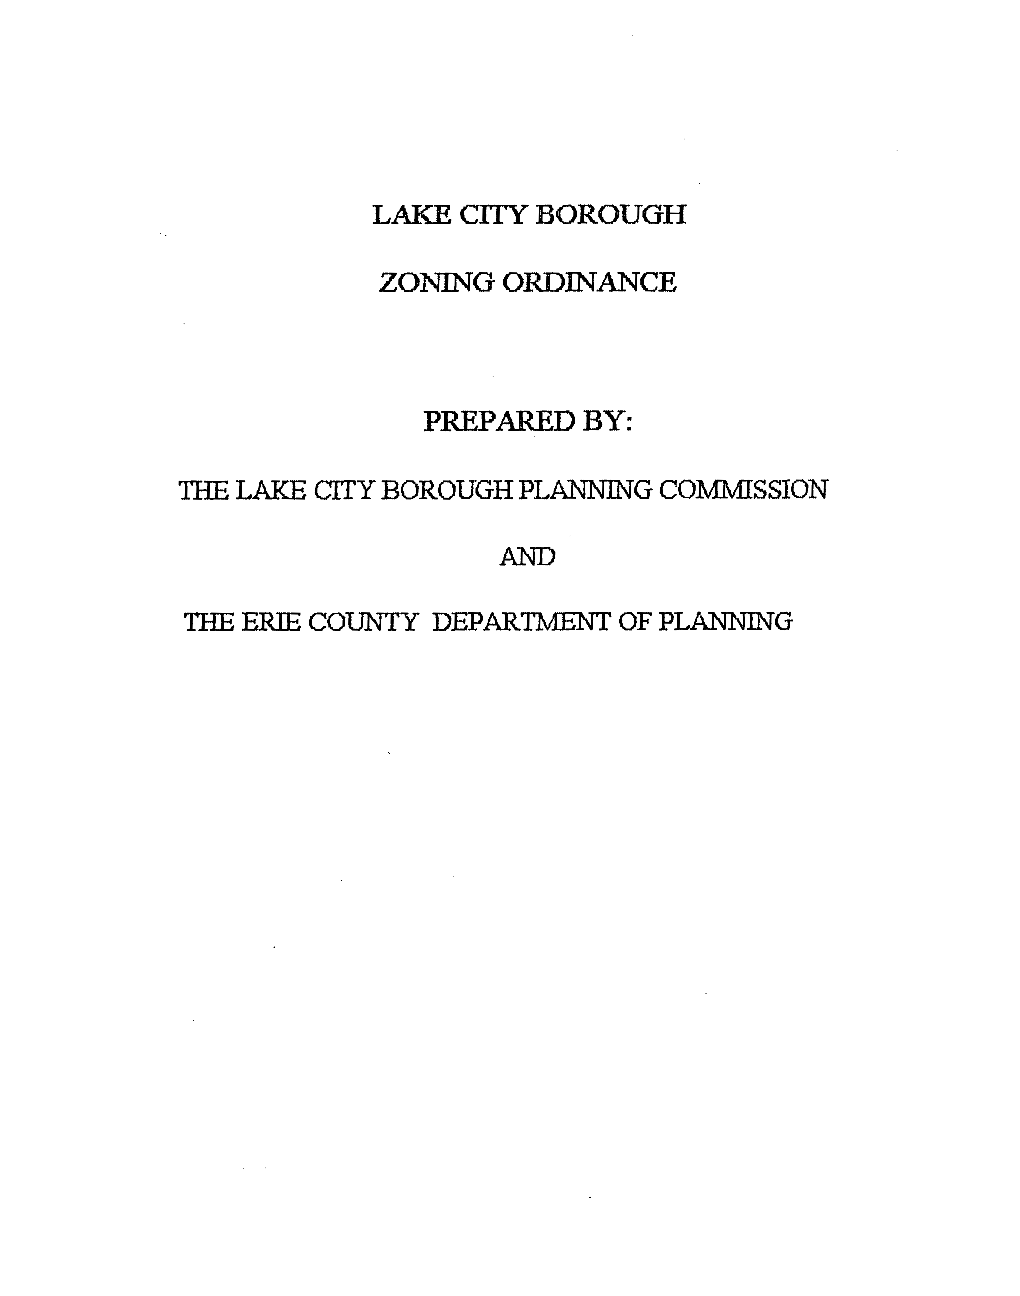 Twe Lax23 City Borough Plan”G Commission the Erie